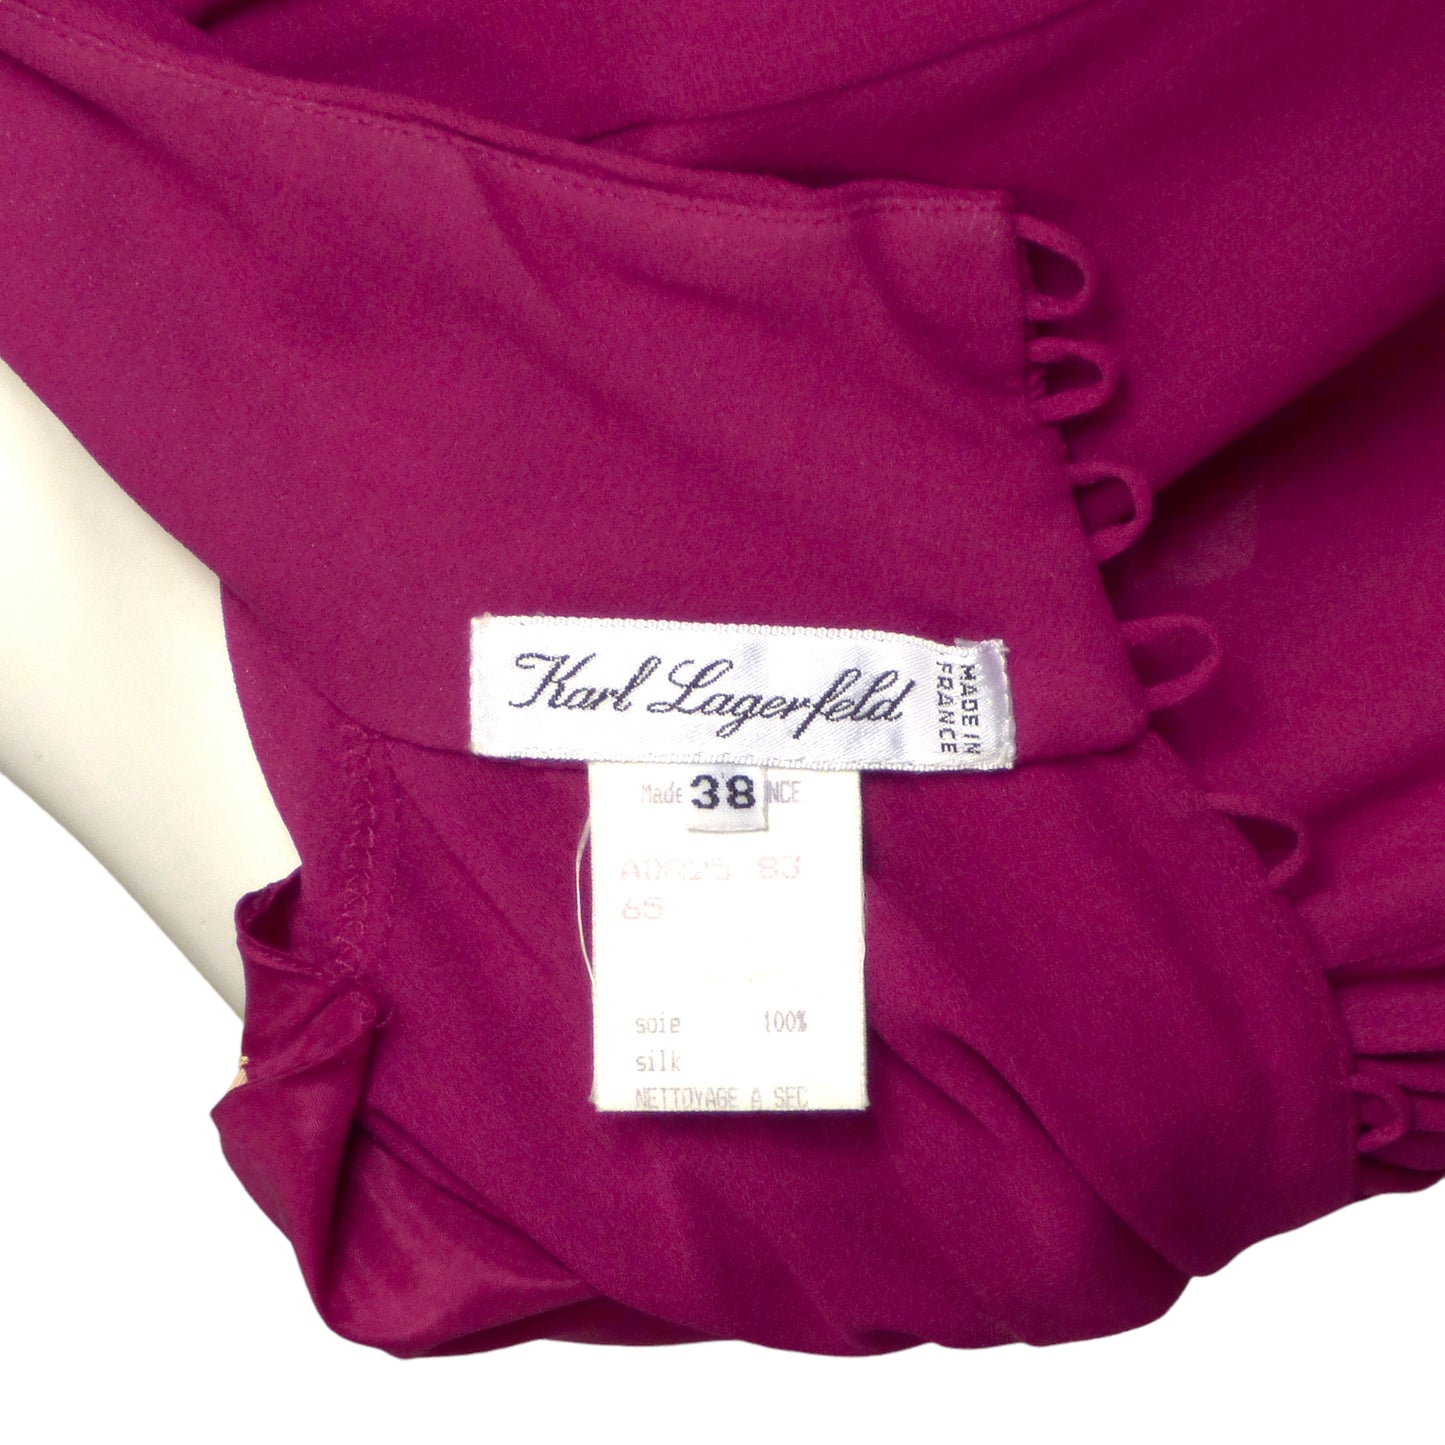 KARL LAGERFELD- 1990s Raspberry Crepe Dress, Size 6